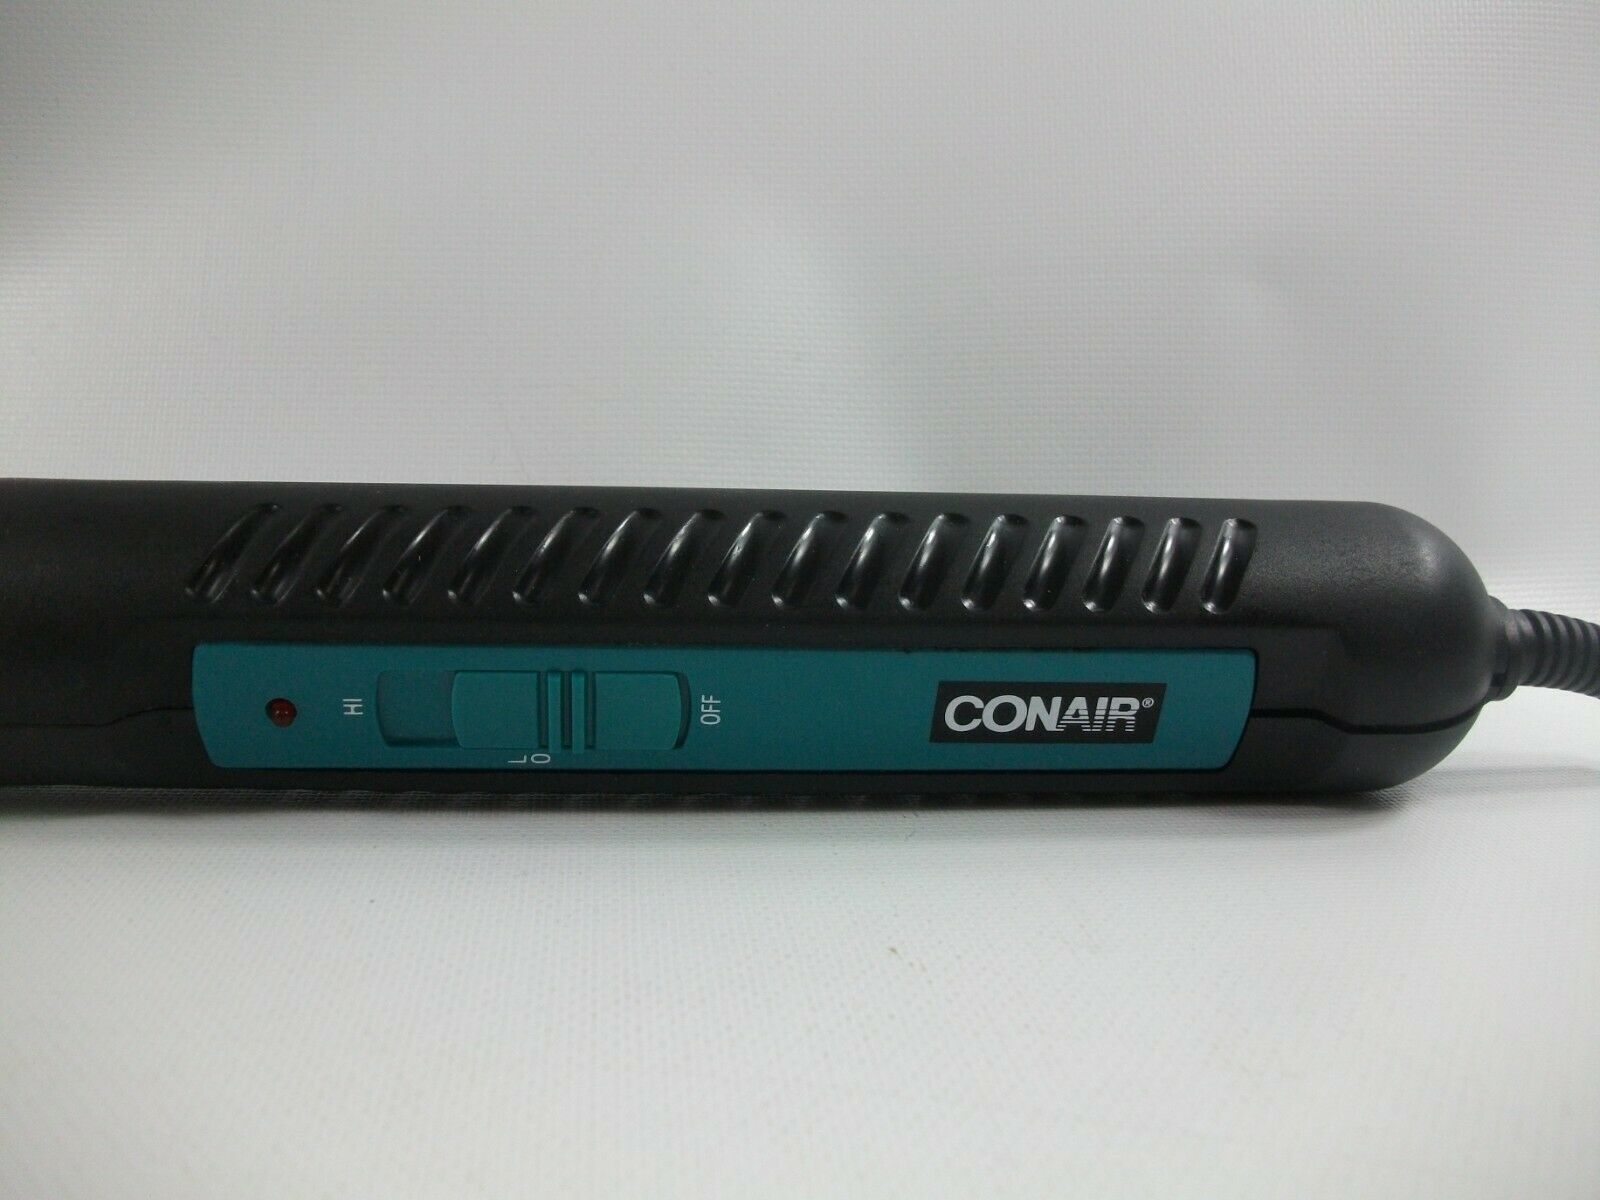 Conair Wm30ffc Handheld 2 Speed Vibrating Angle Massager Massage Works